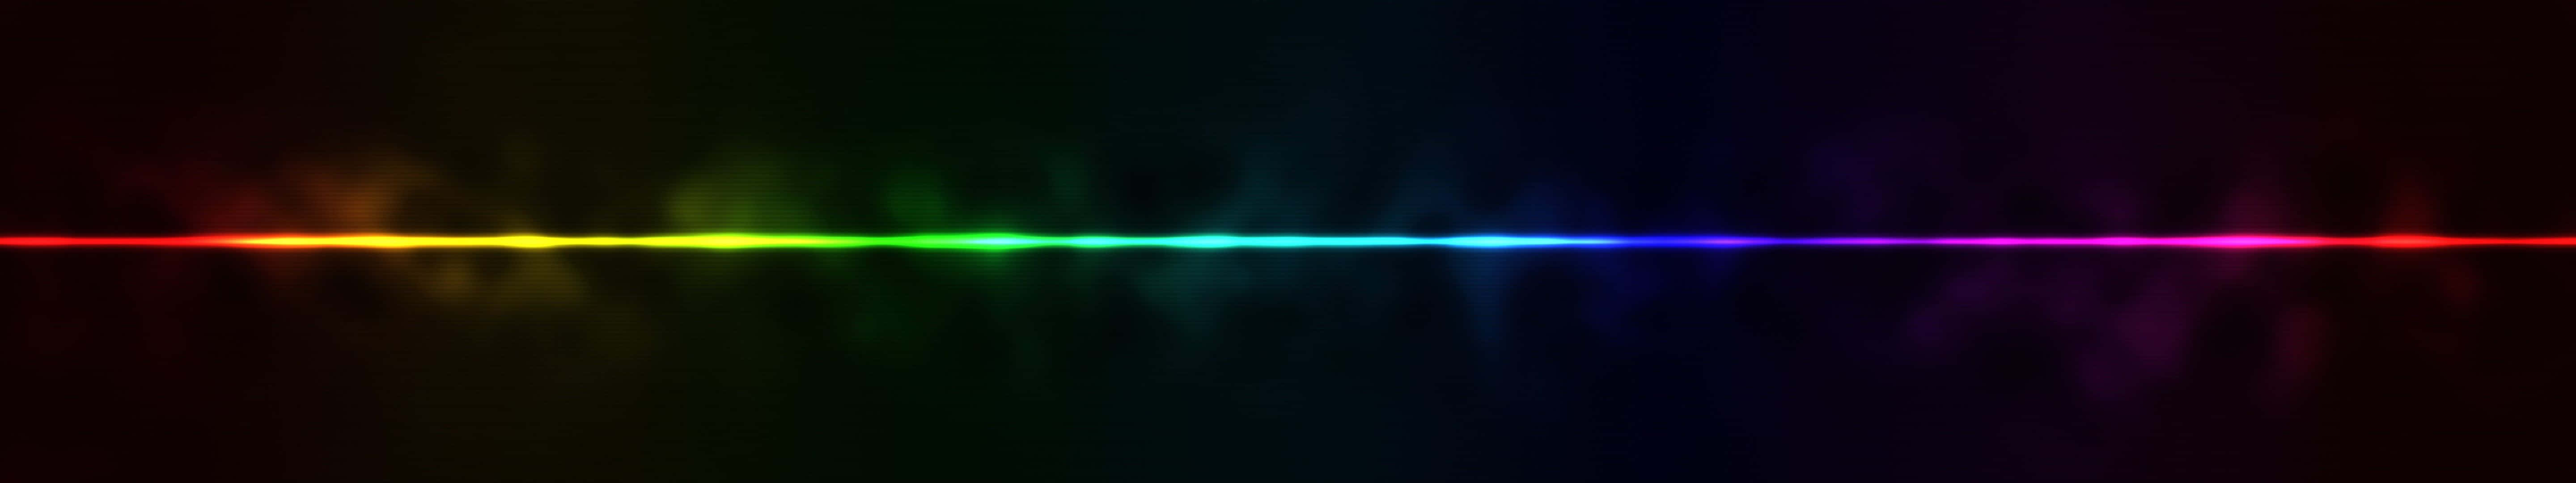 Lineareregenbogeneffekt Pixel 3 Monitor Hintergrund